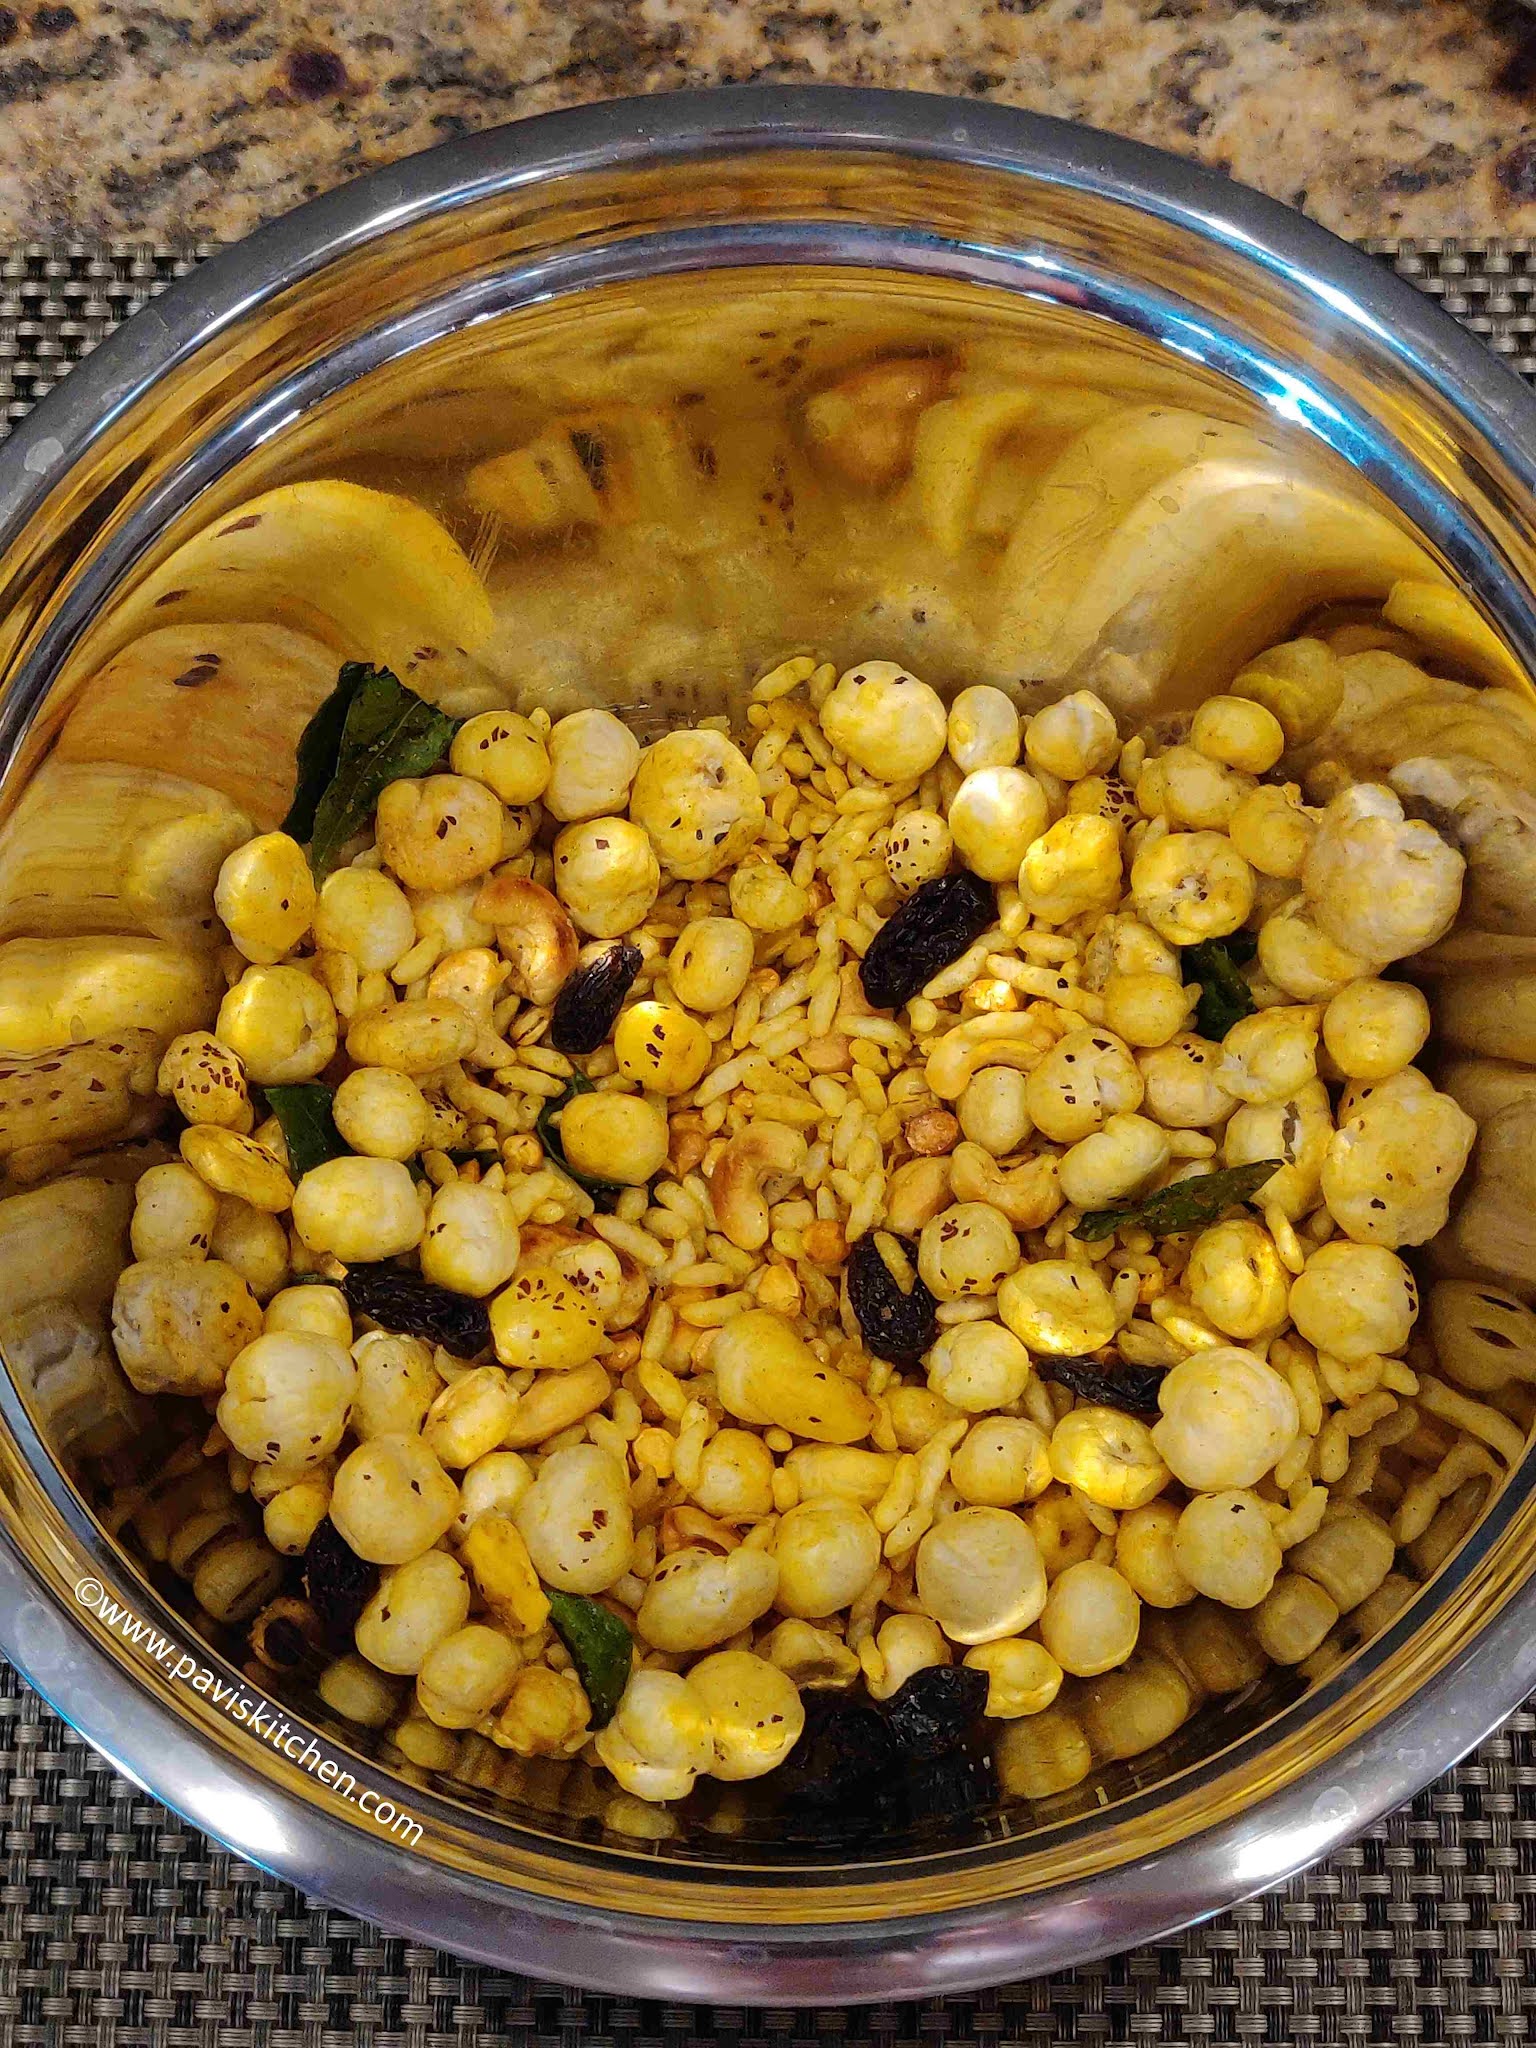 Phool makhana snack | Roasted makhana recipe | Masala makhana recipe